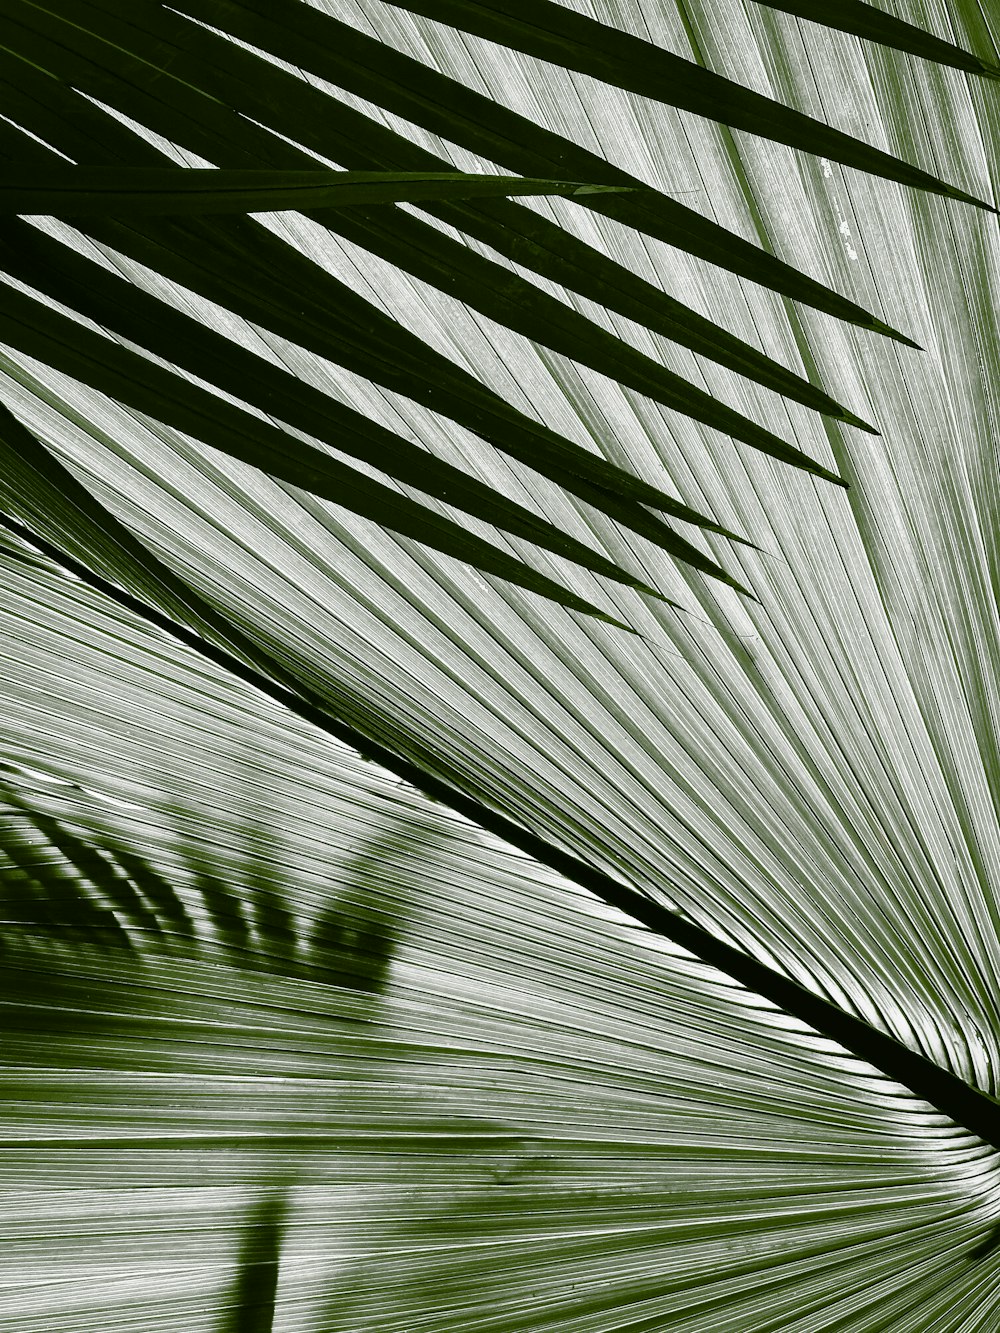 a close up of a leaf of a palm tree